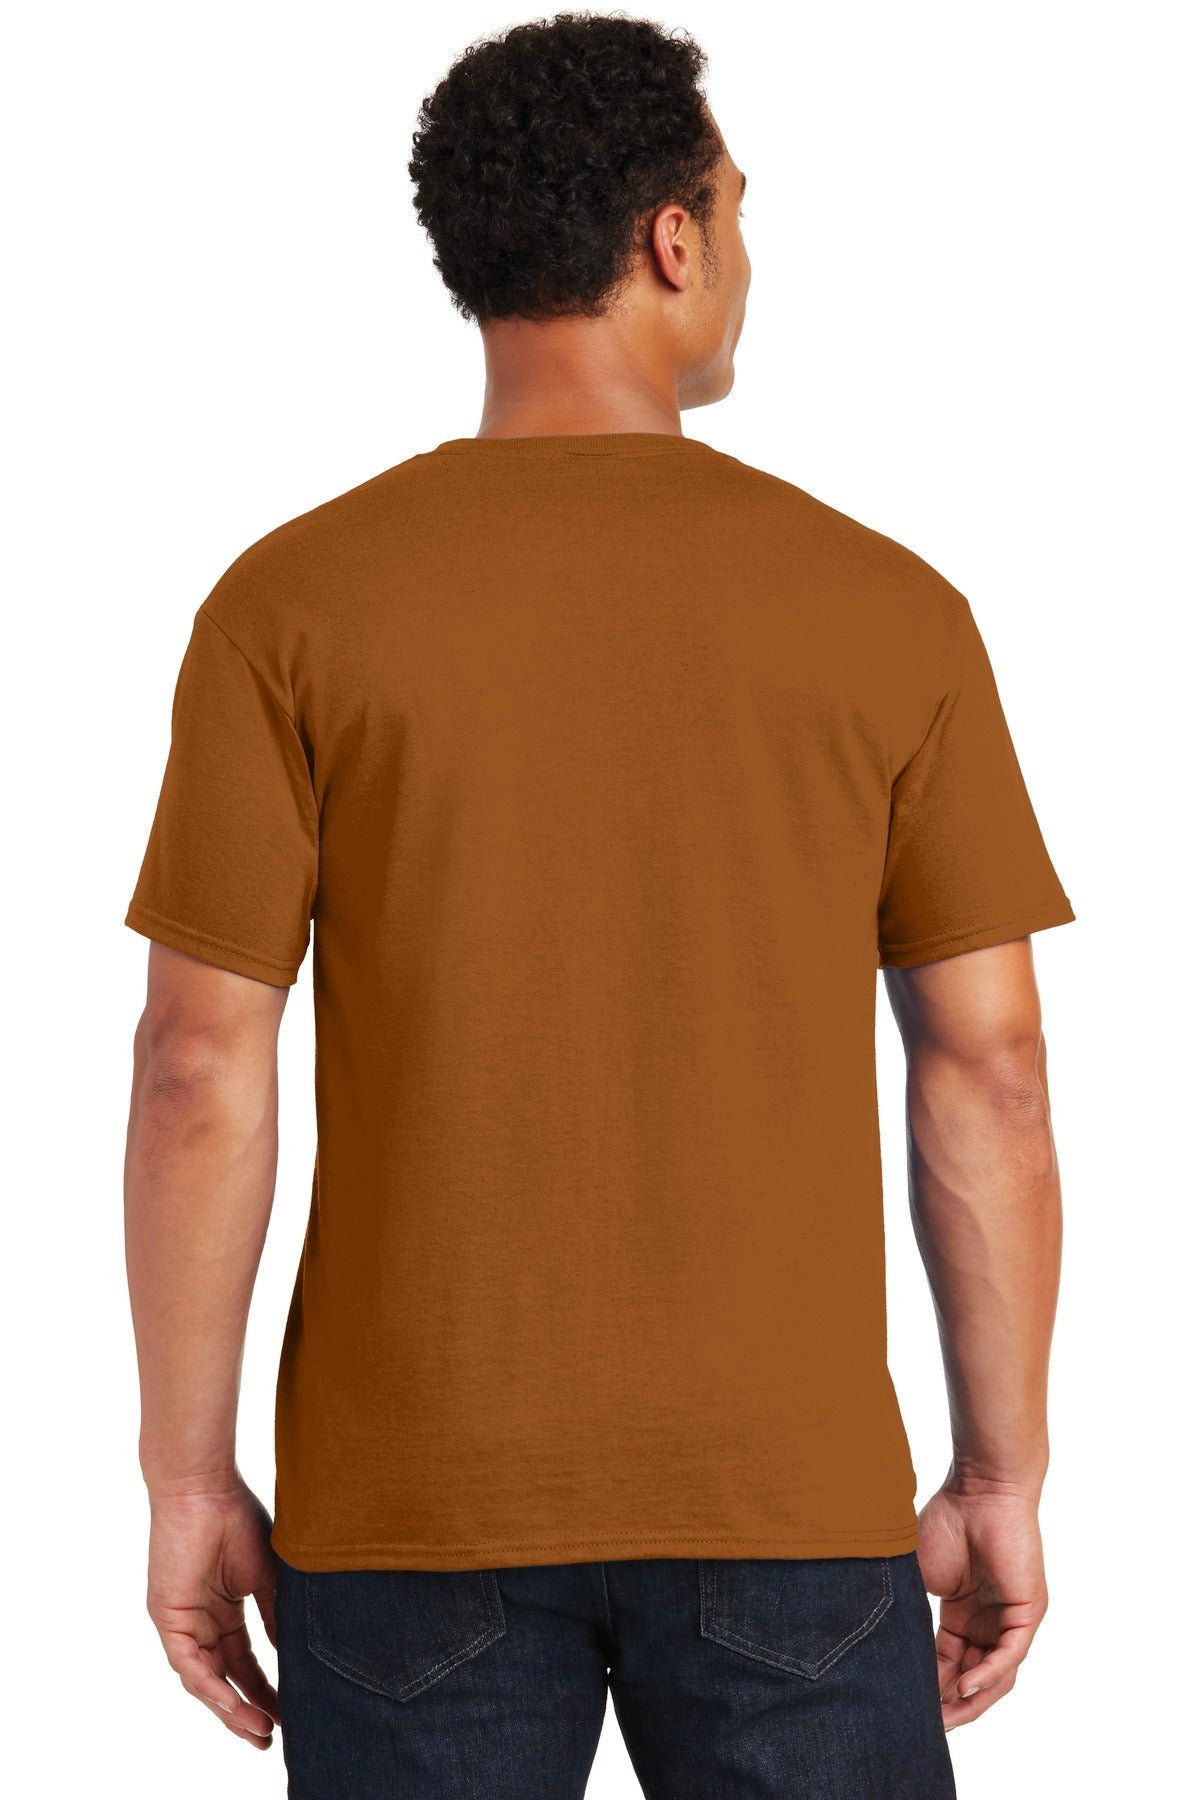 JERZEES® - Dri-Power® 50/50 Cotton/Poly T-Shirt. 29M [Texas Orange] - DFW Impression